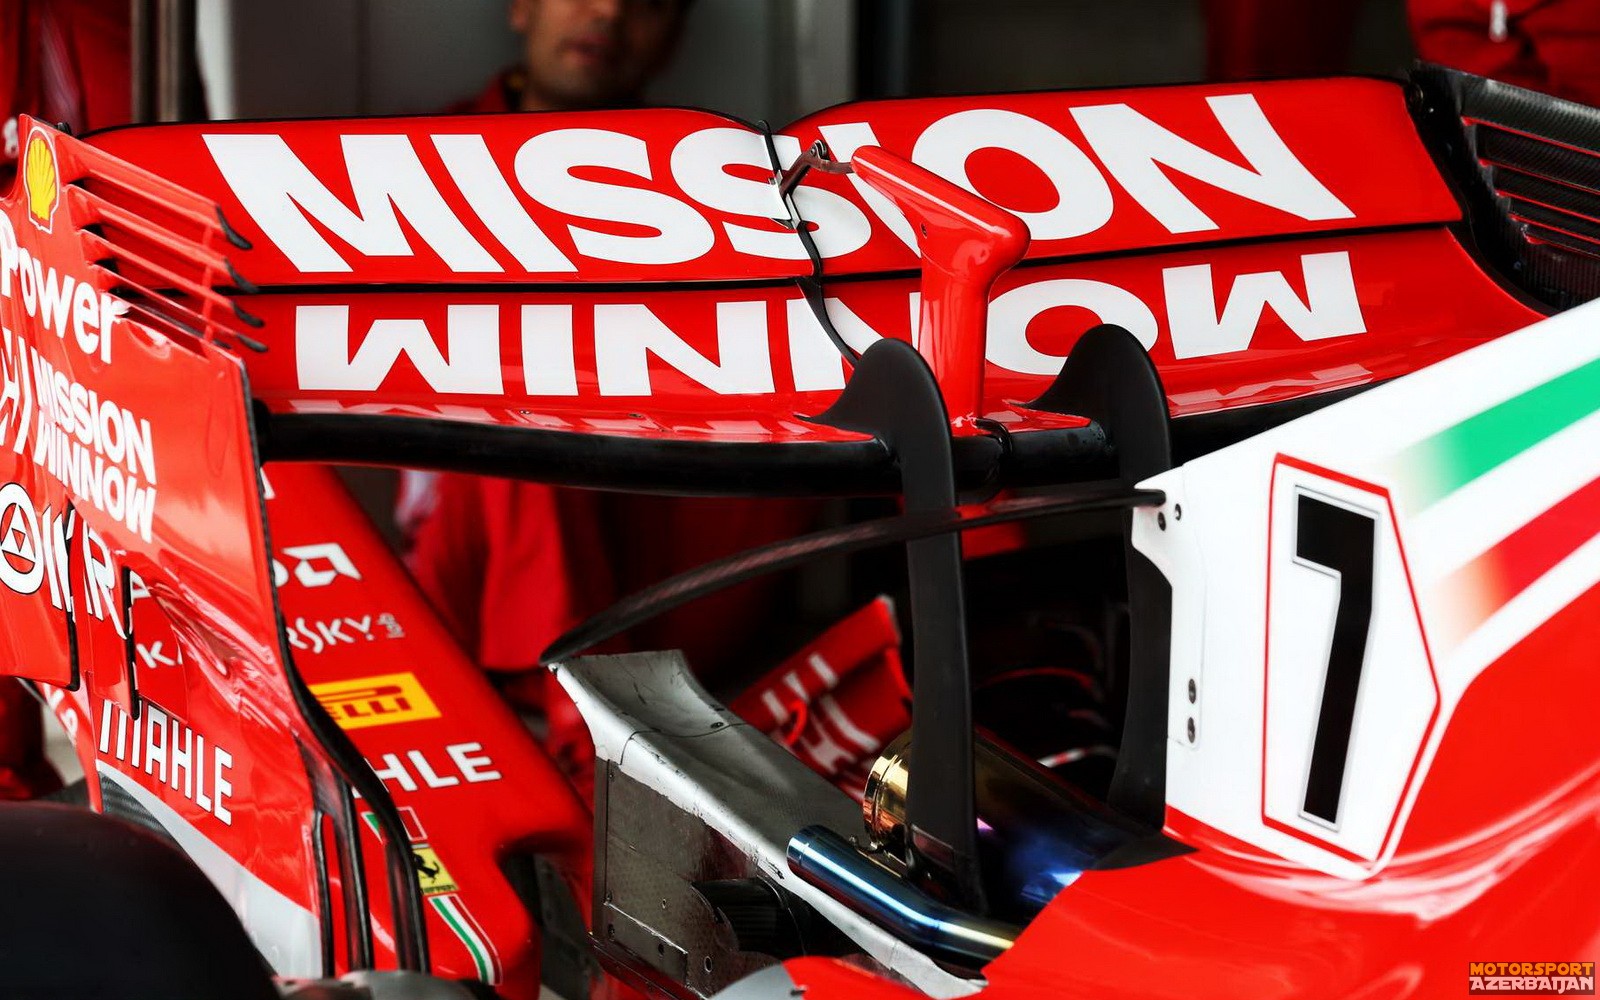 Ferrari and Phillip Morris launch Mission Minnow